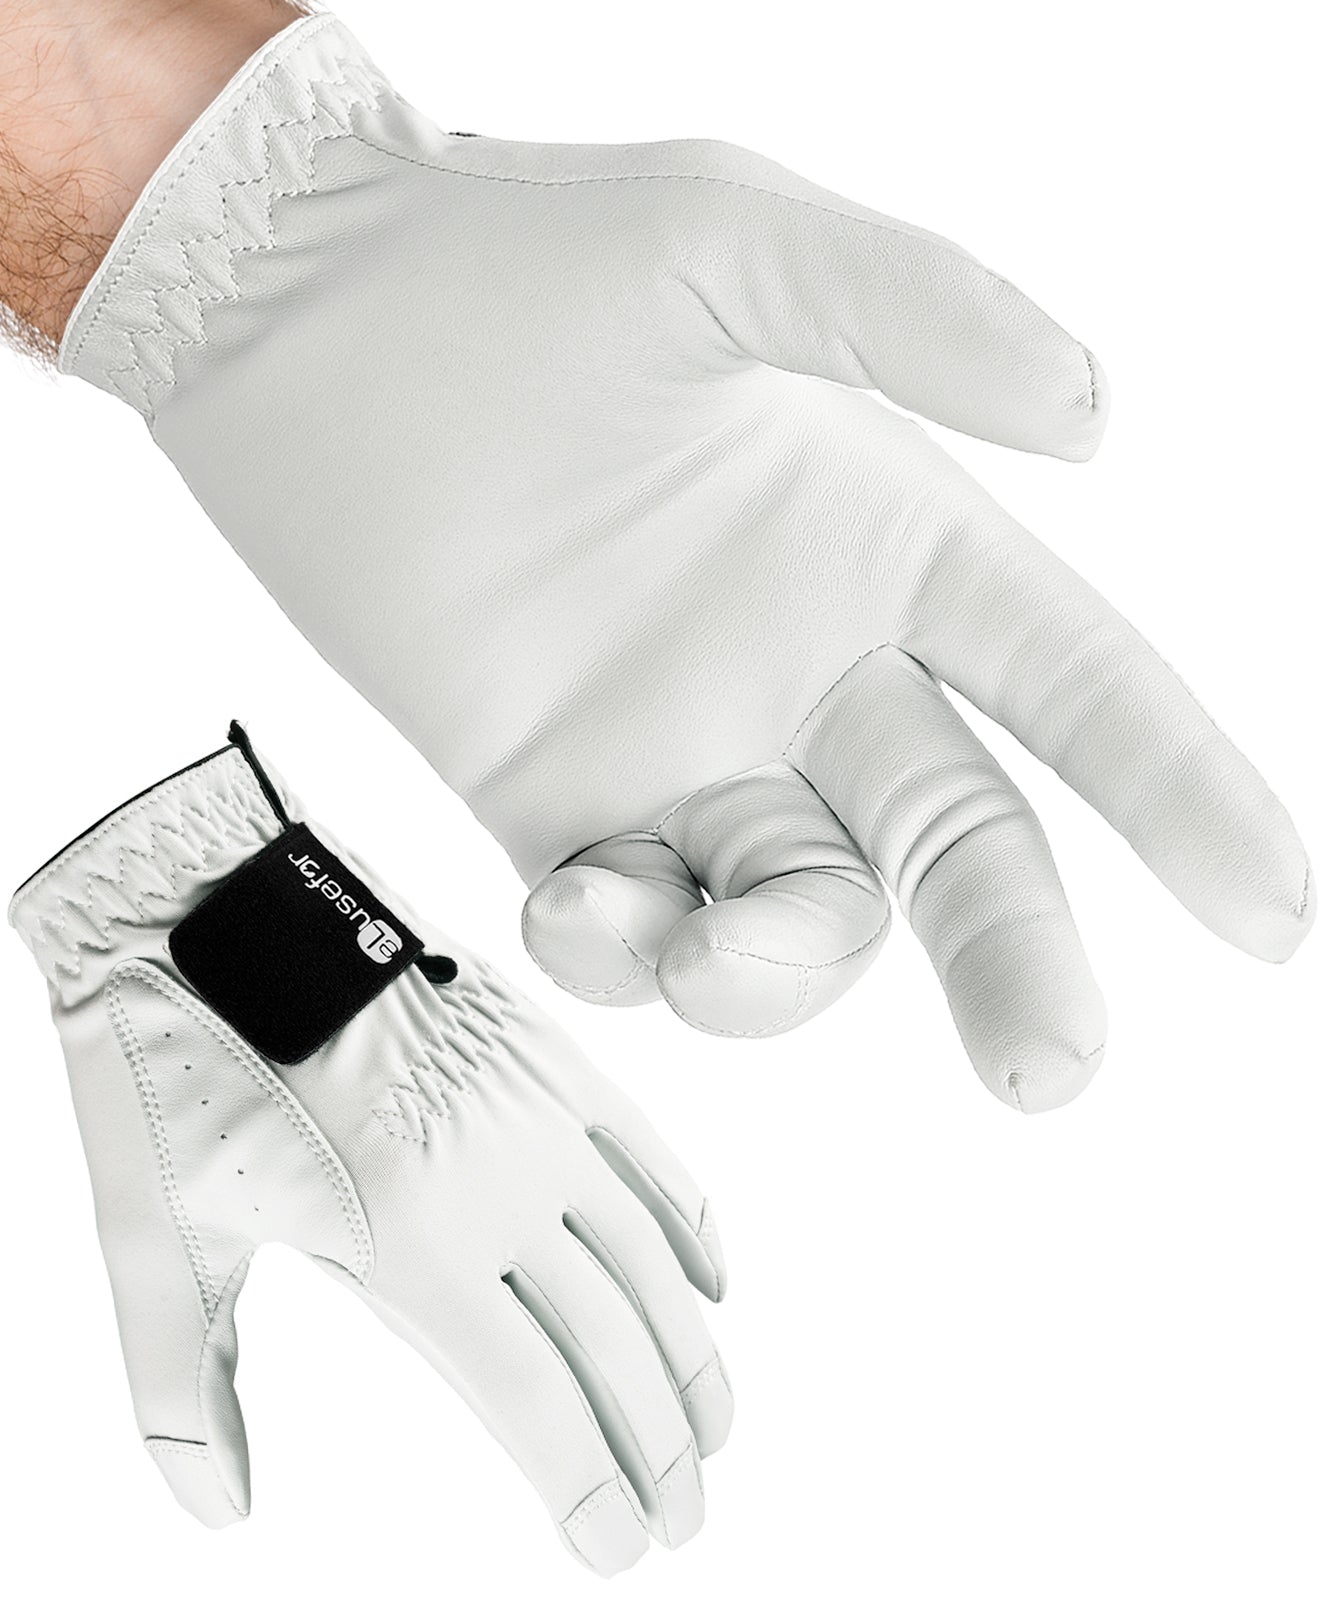 Precision Men‘s Golf Glove, Tech PU, Second Skin, BadgeFlex for Add-on Badges